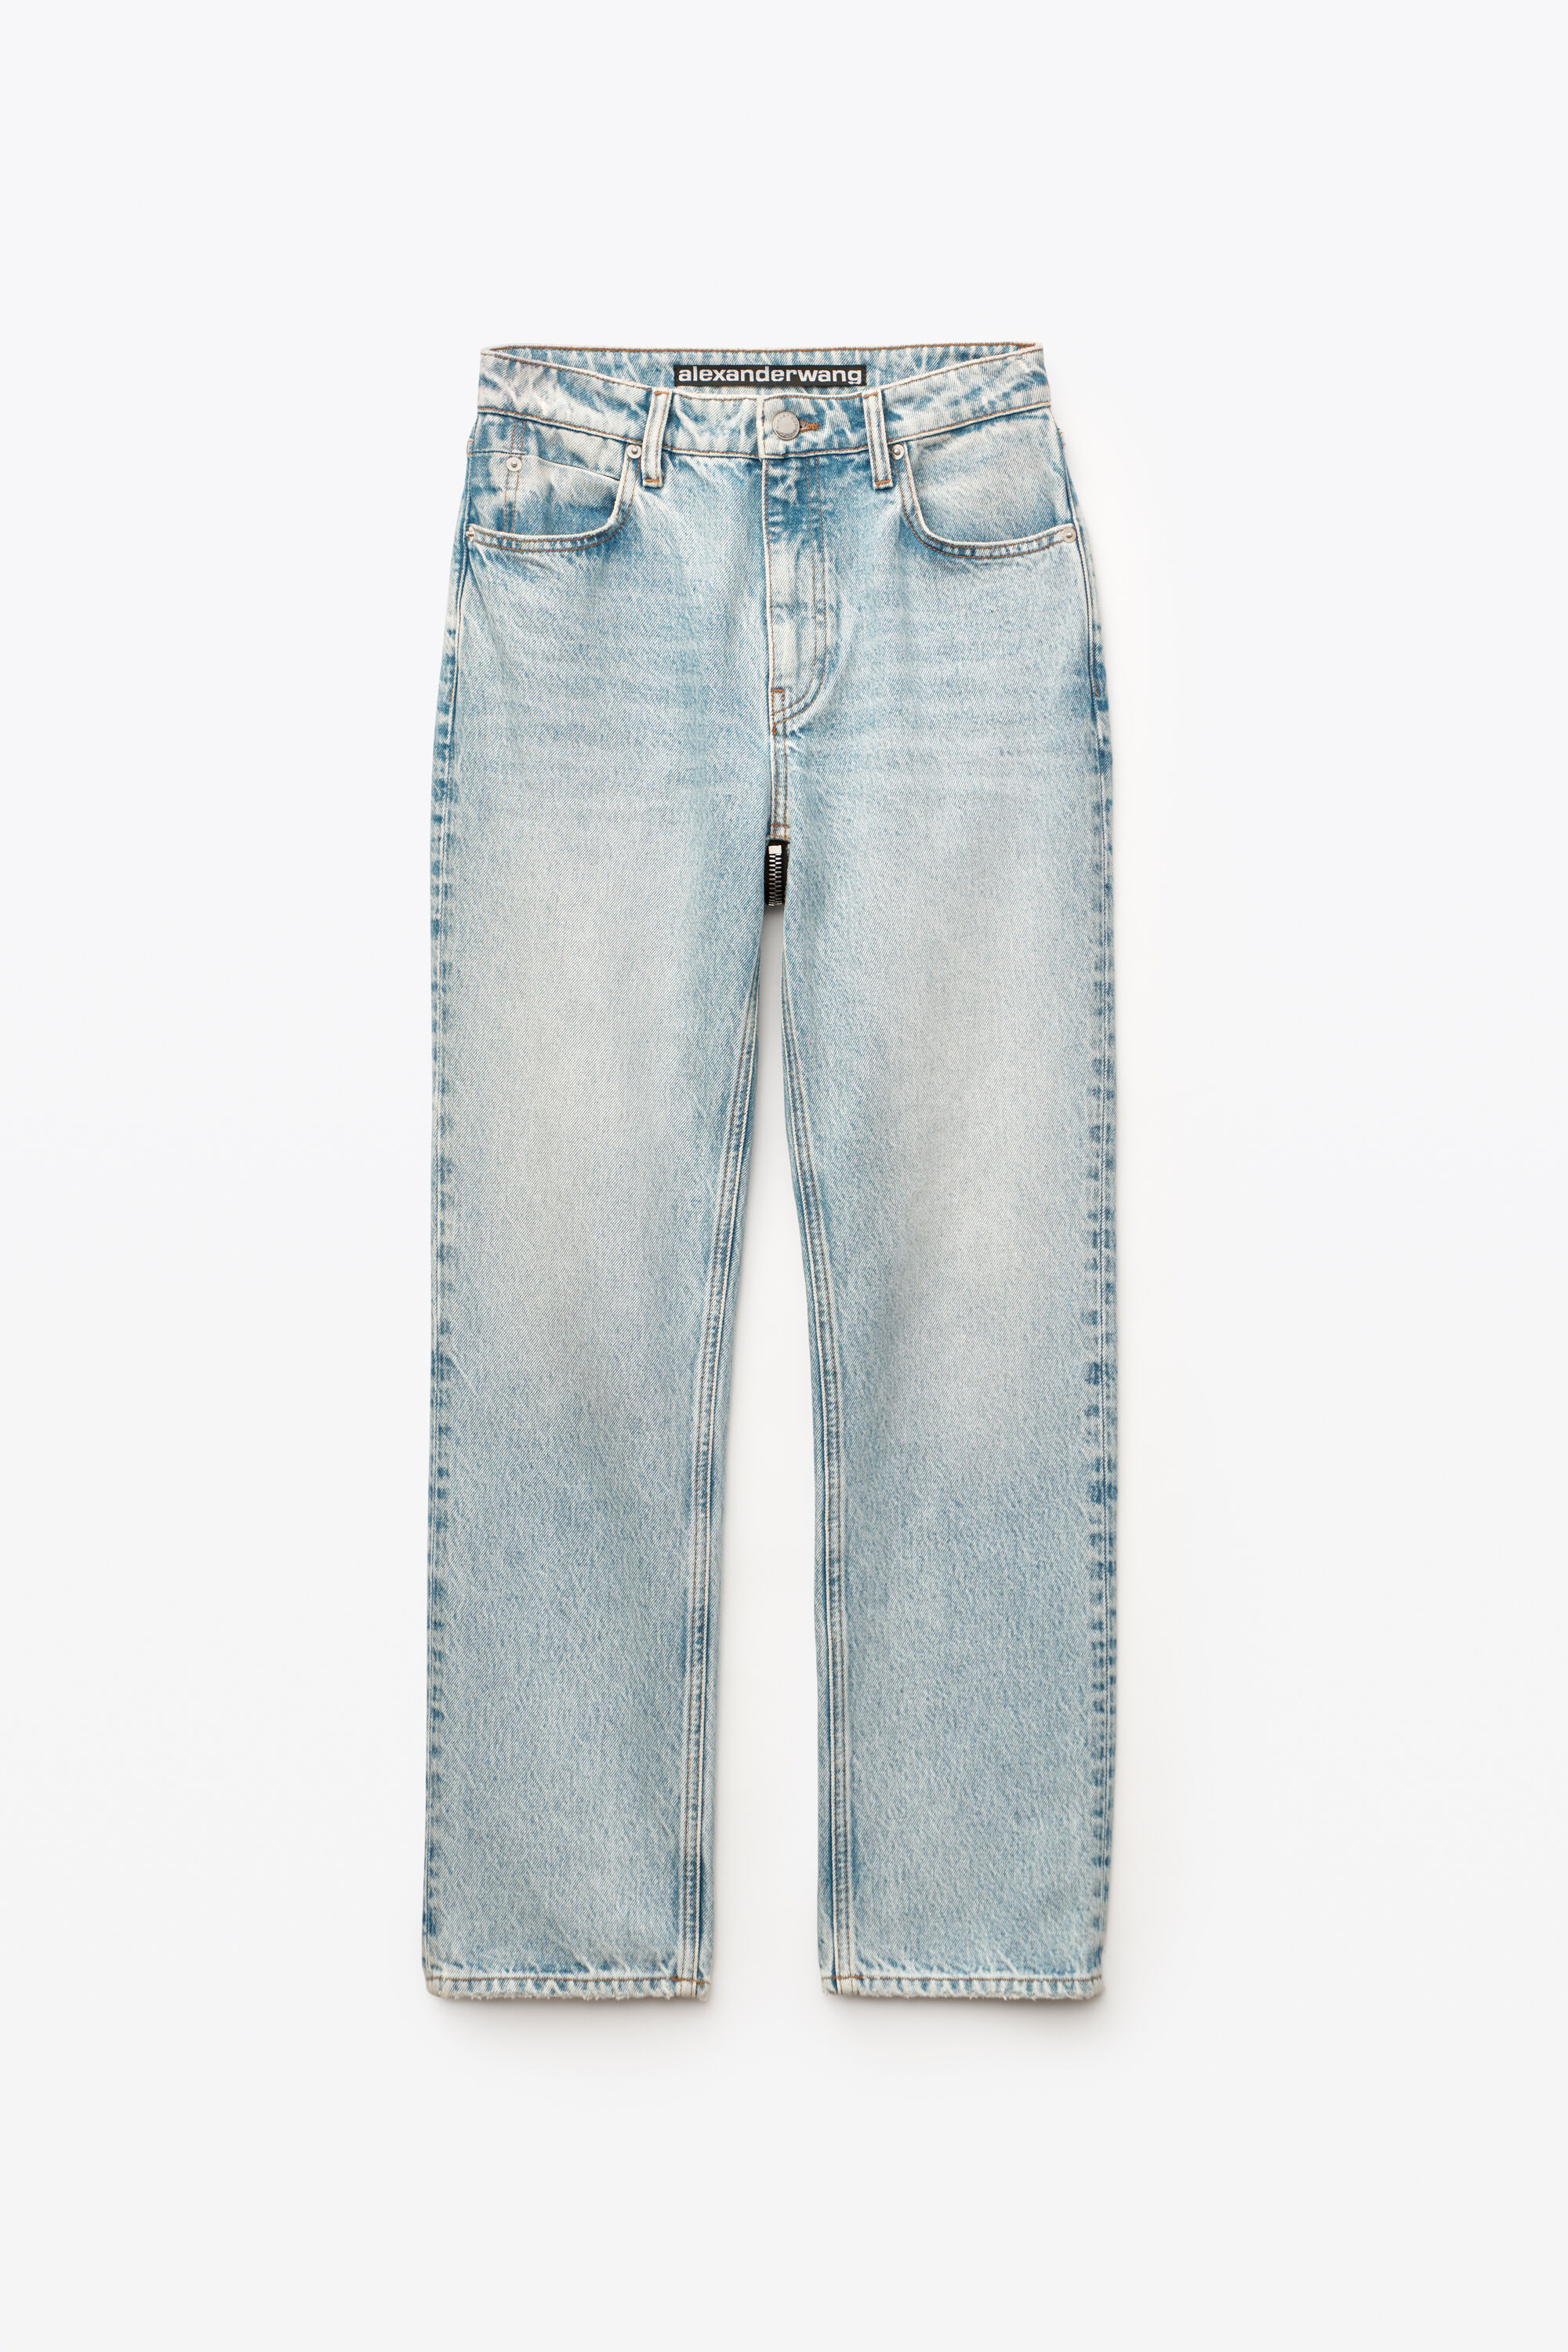 alexander wang zip jeans